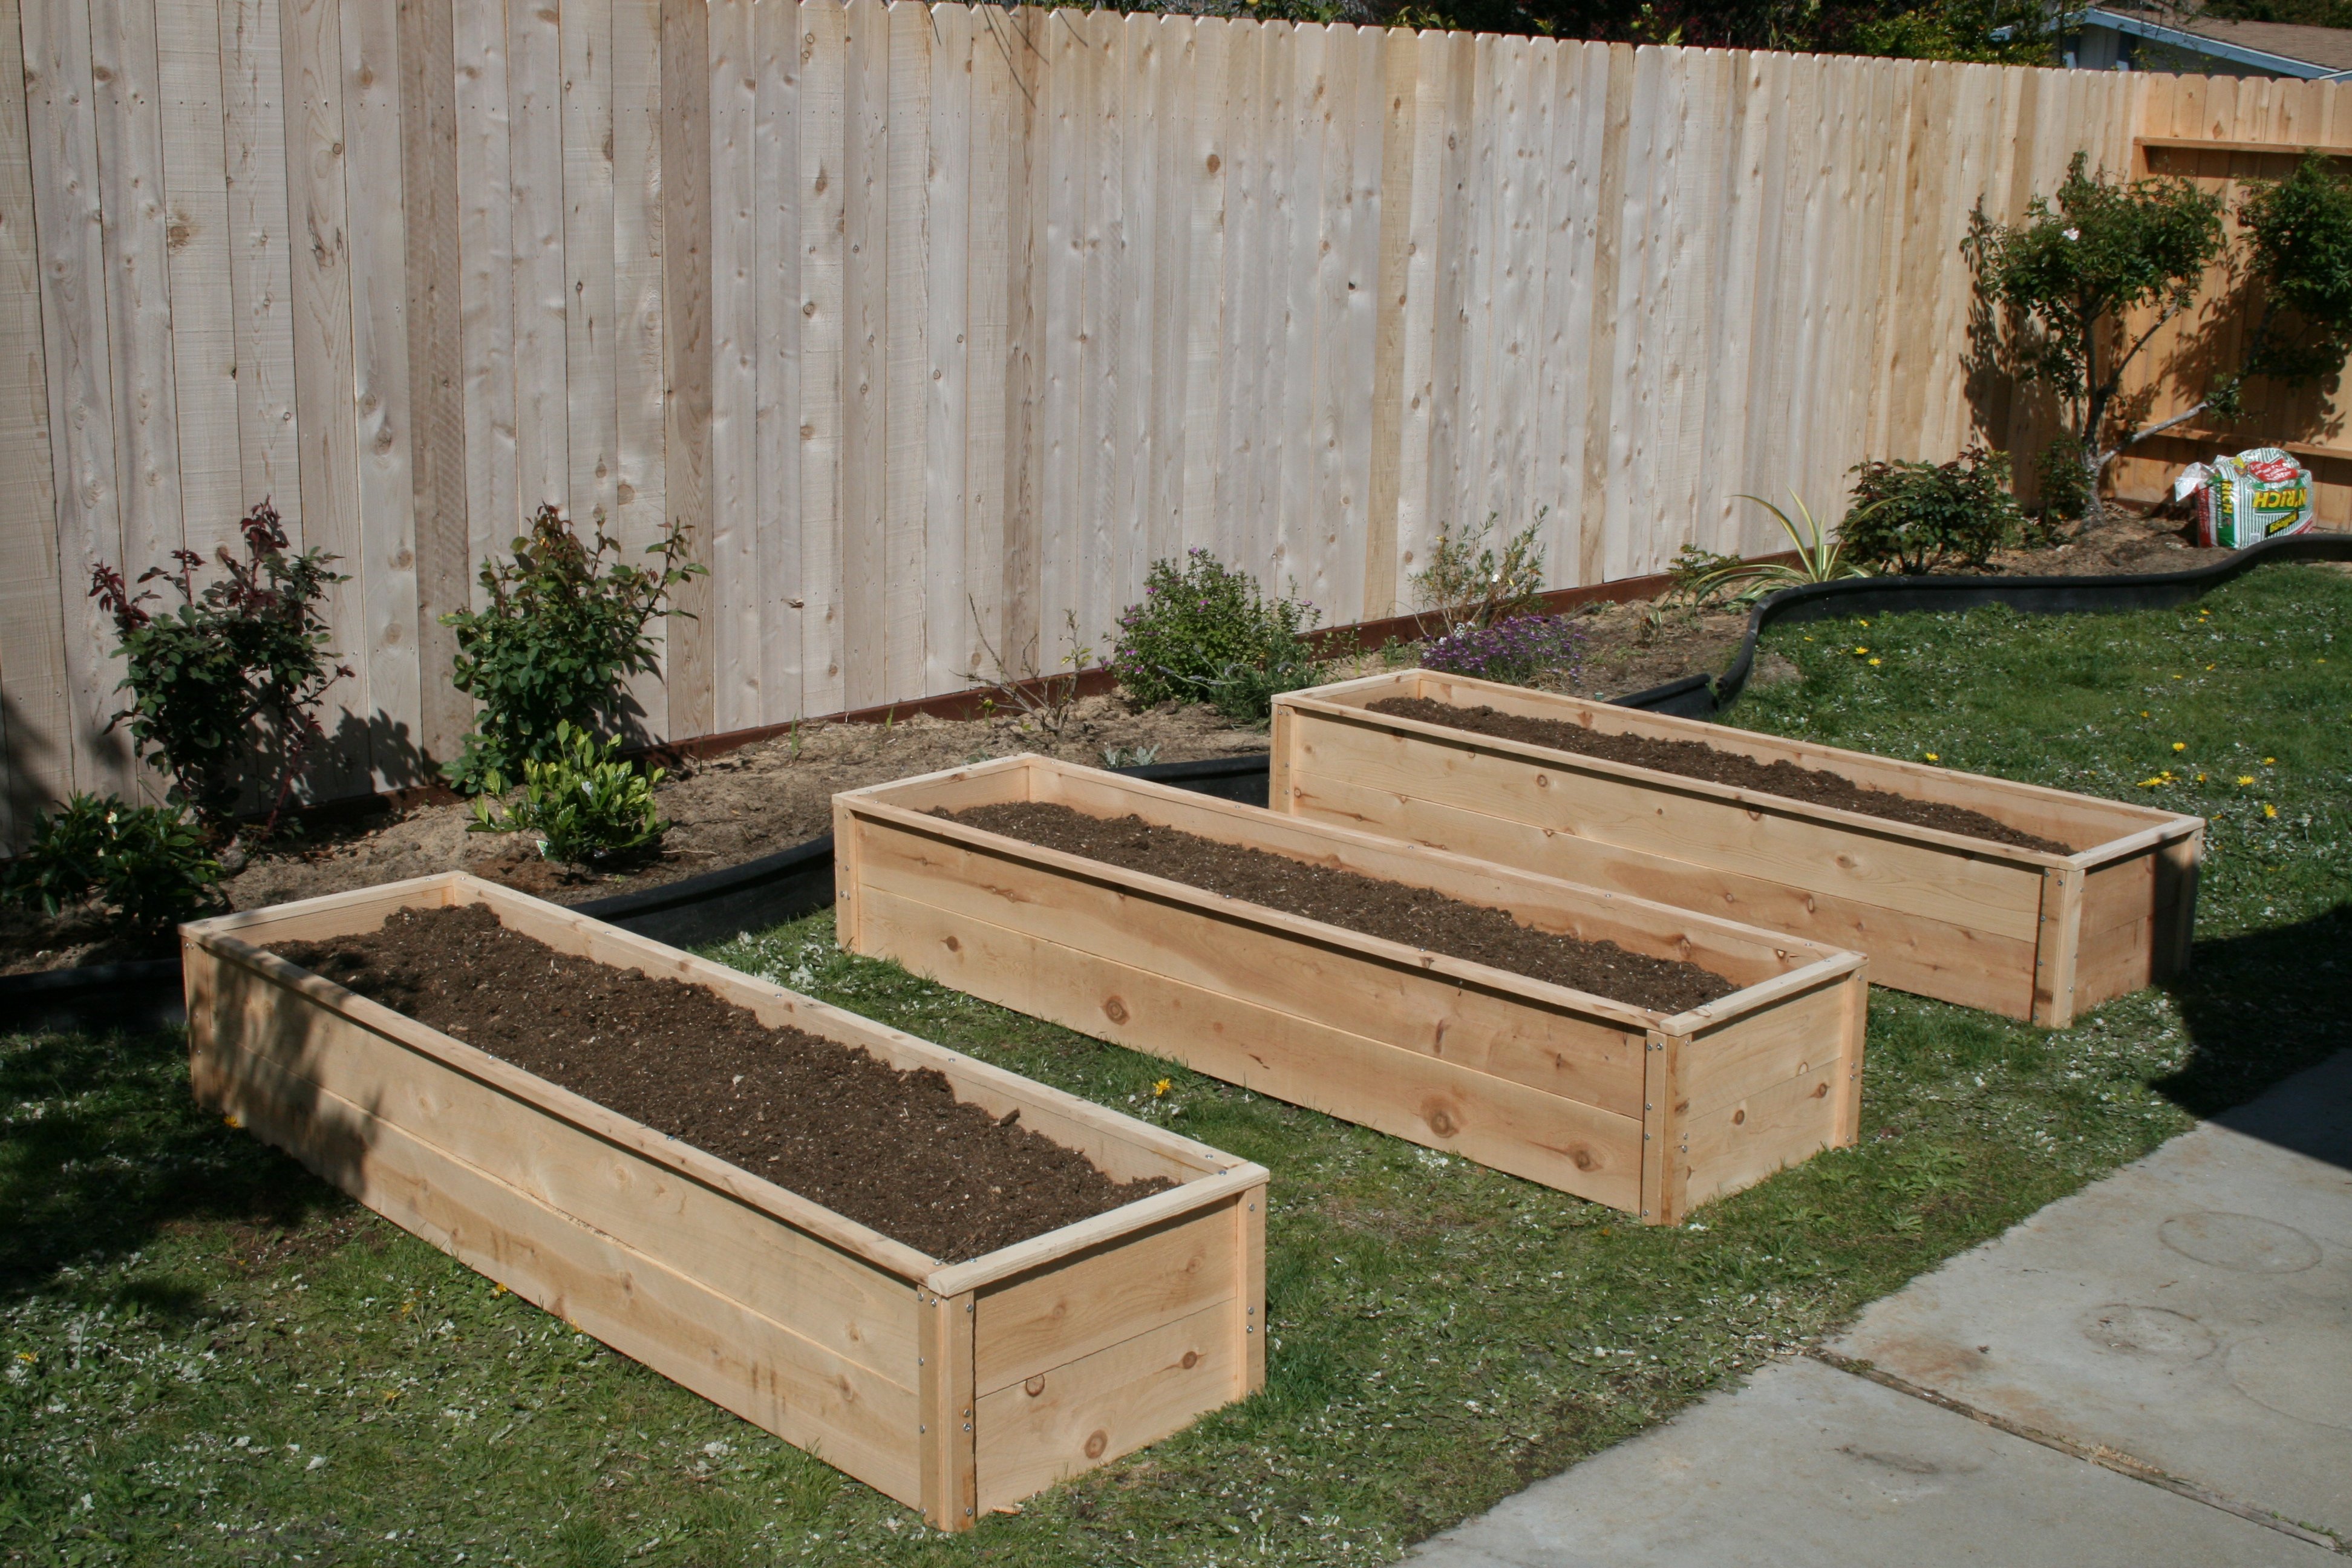 How Do You Build Raised Garden Beds